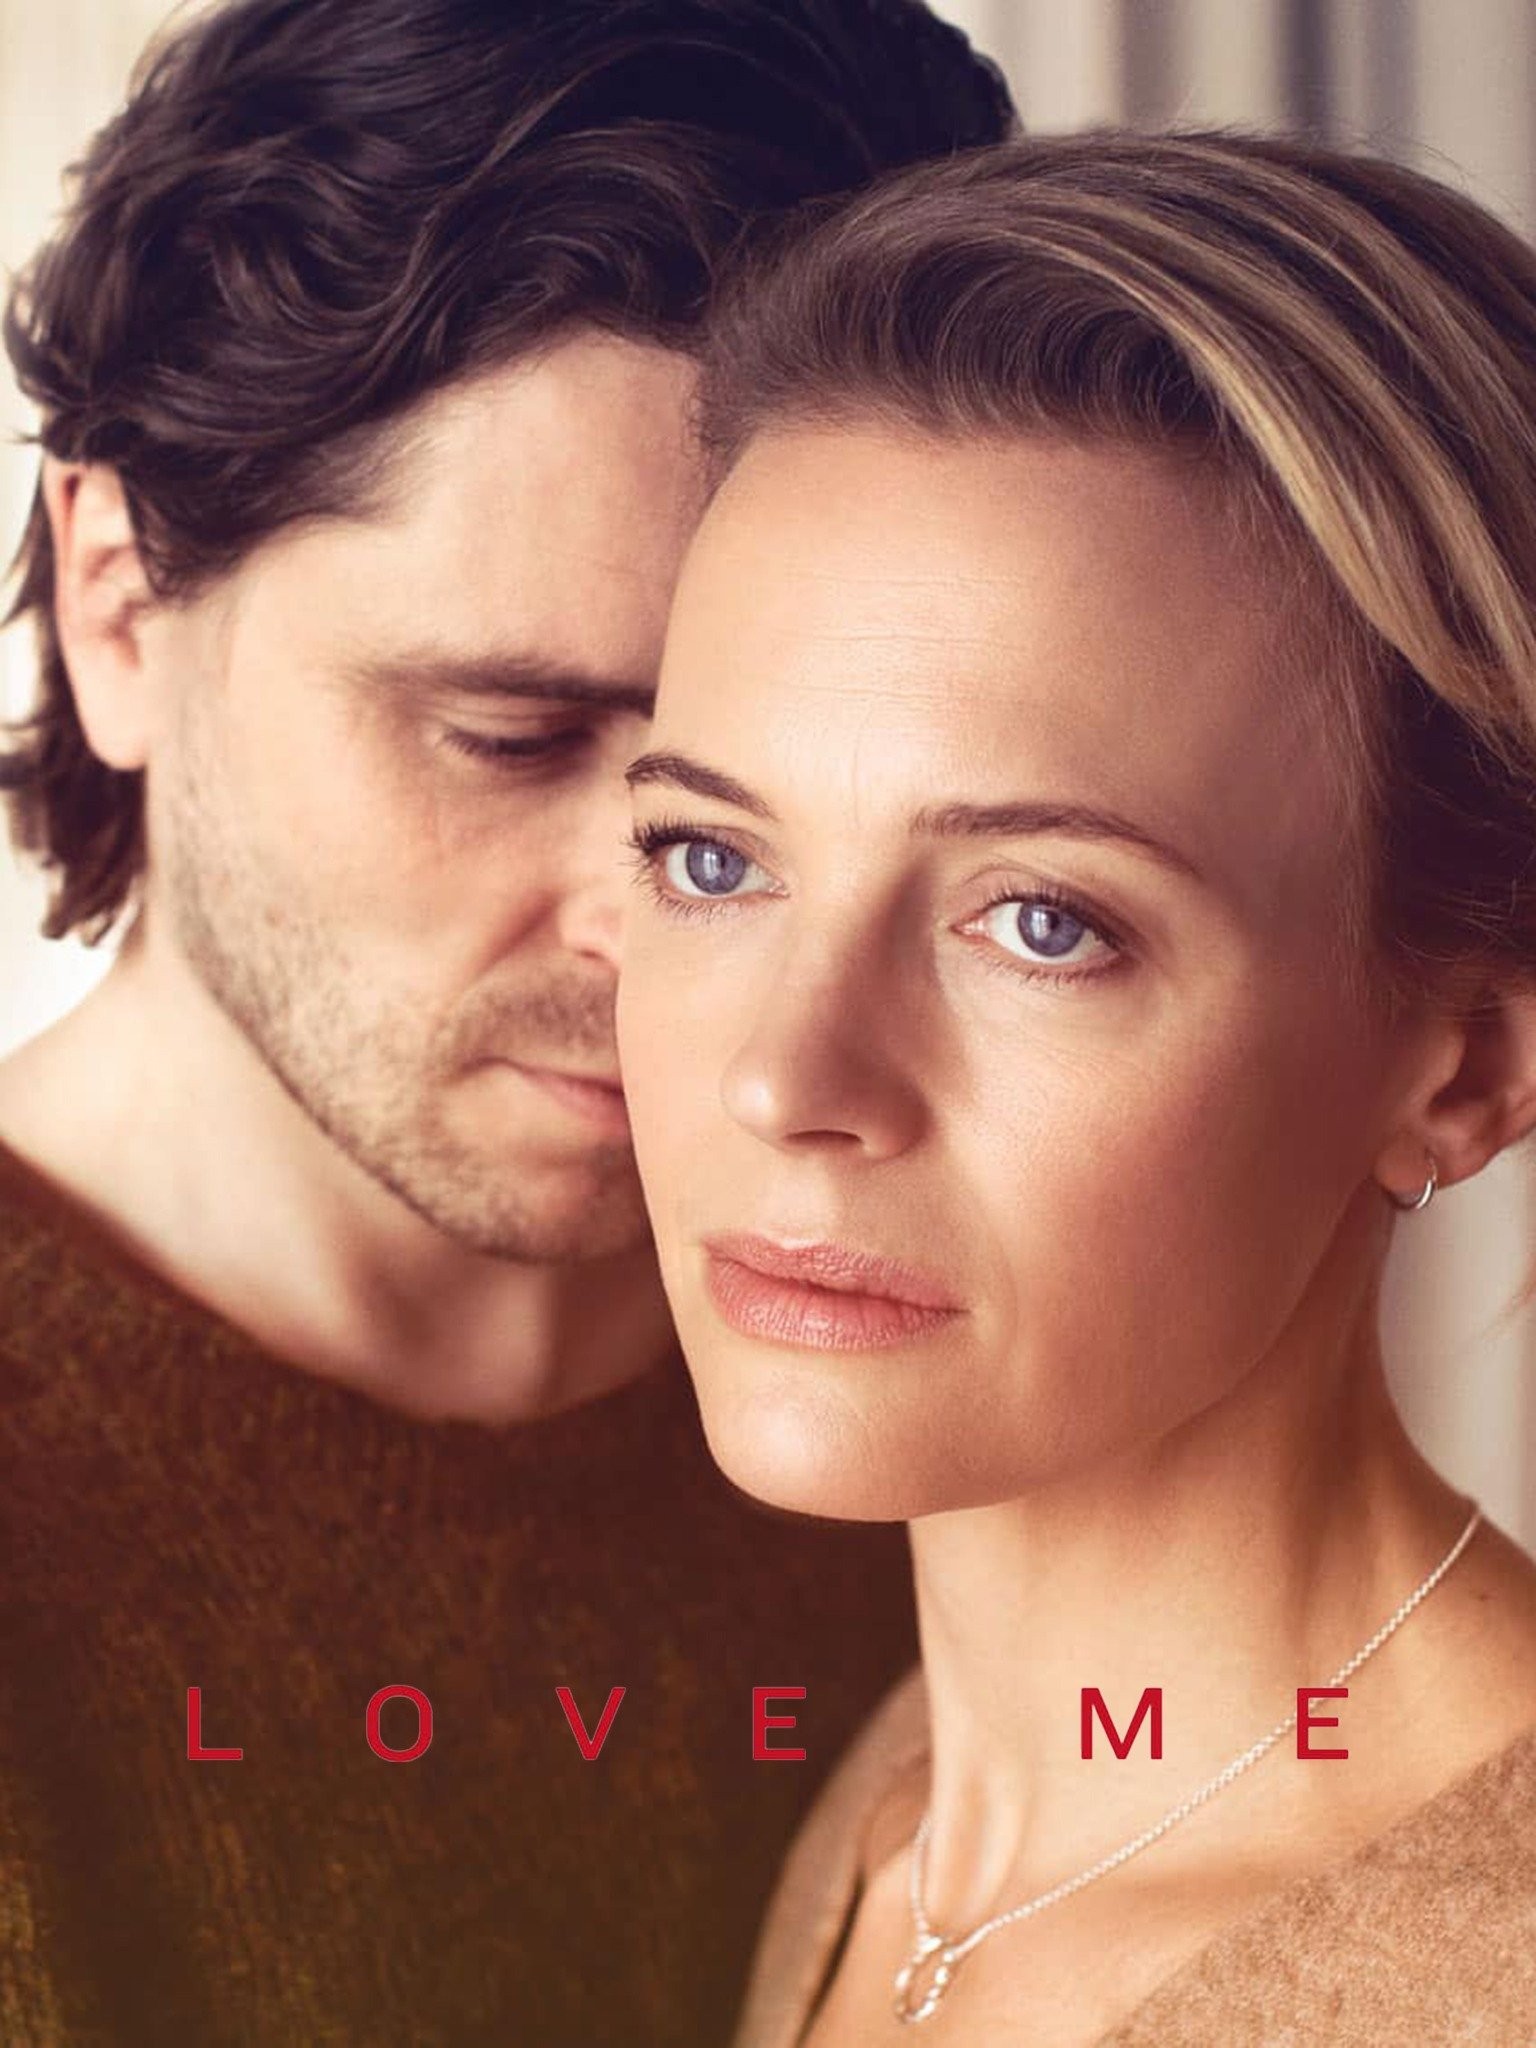 Love me: Season 1